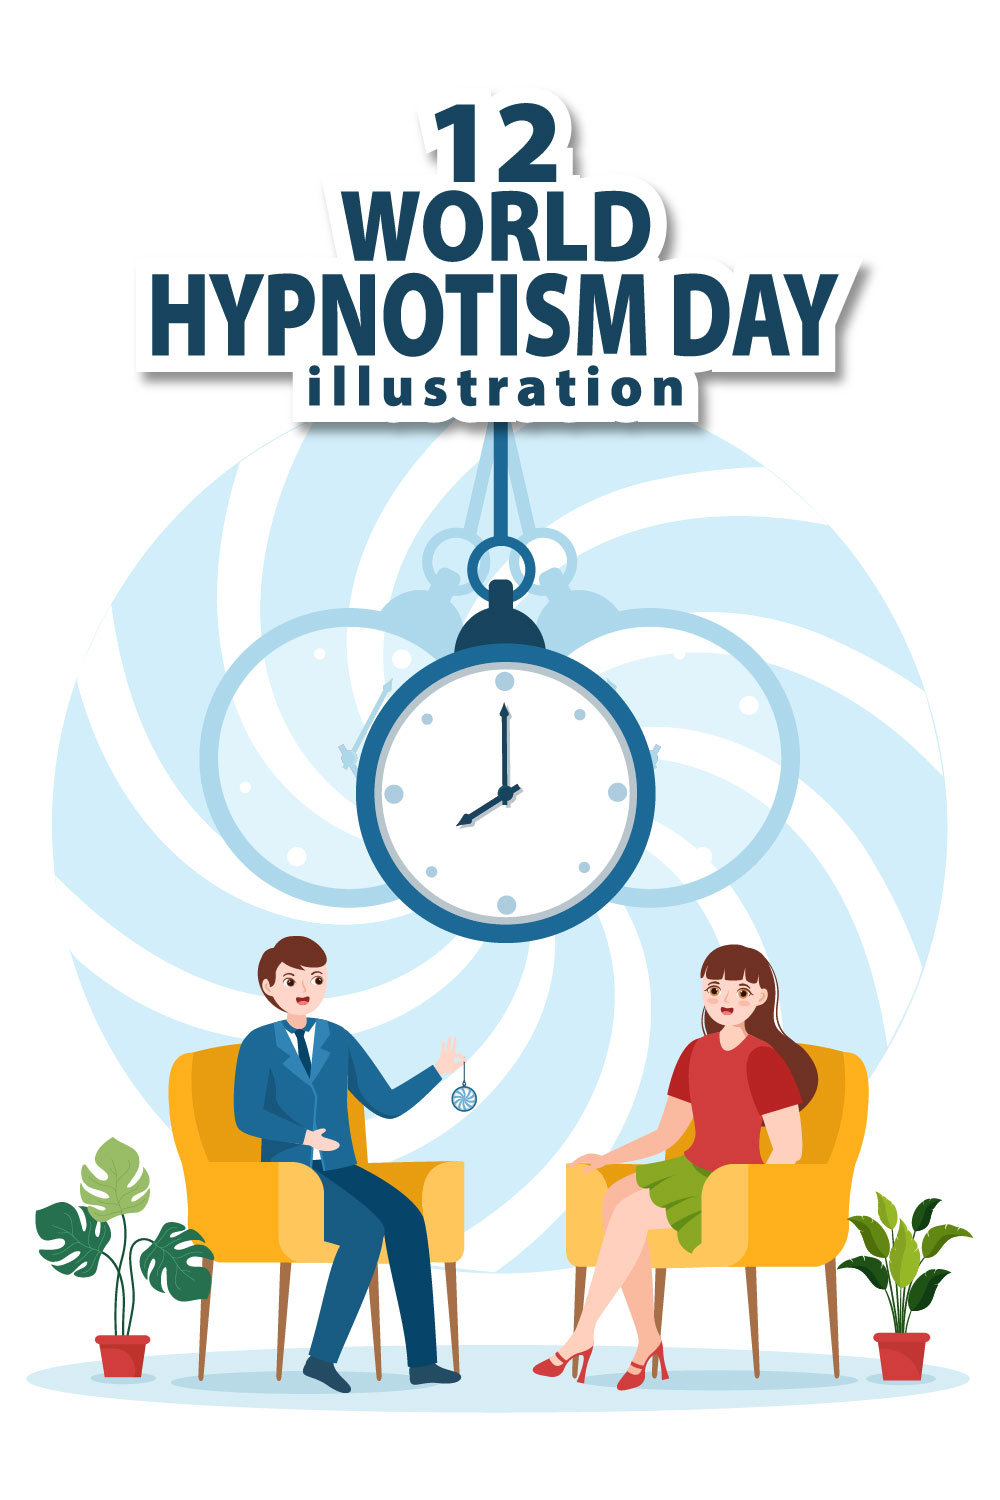 World Hypnotism Day Illustration pinterest image.